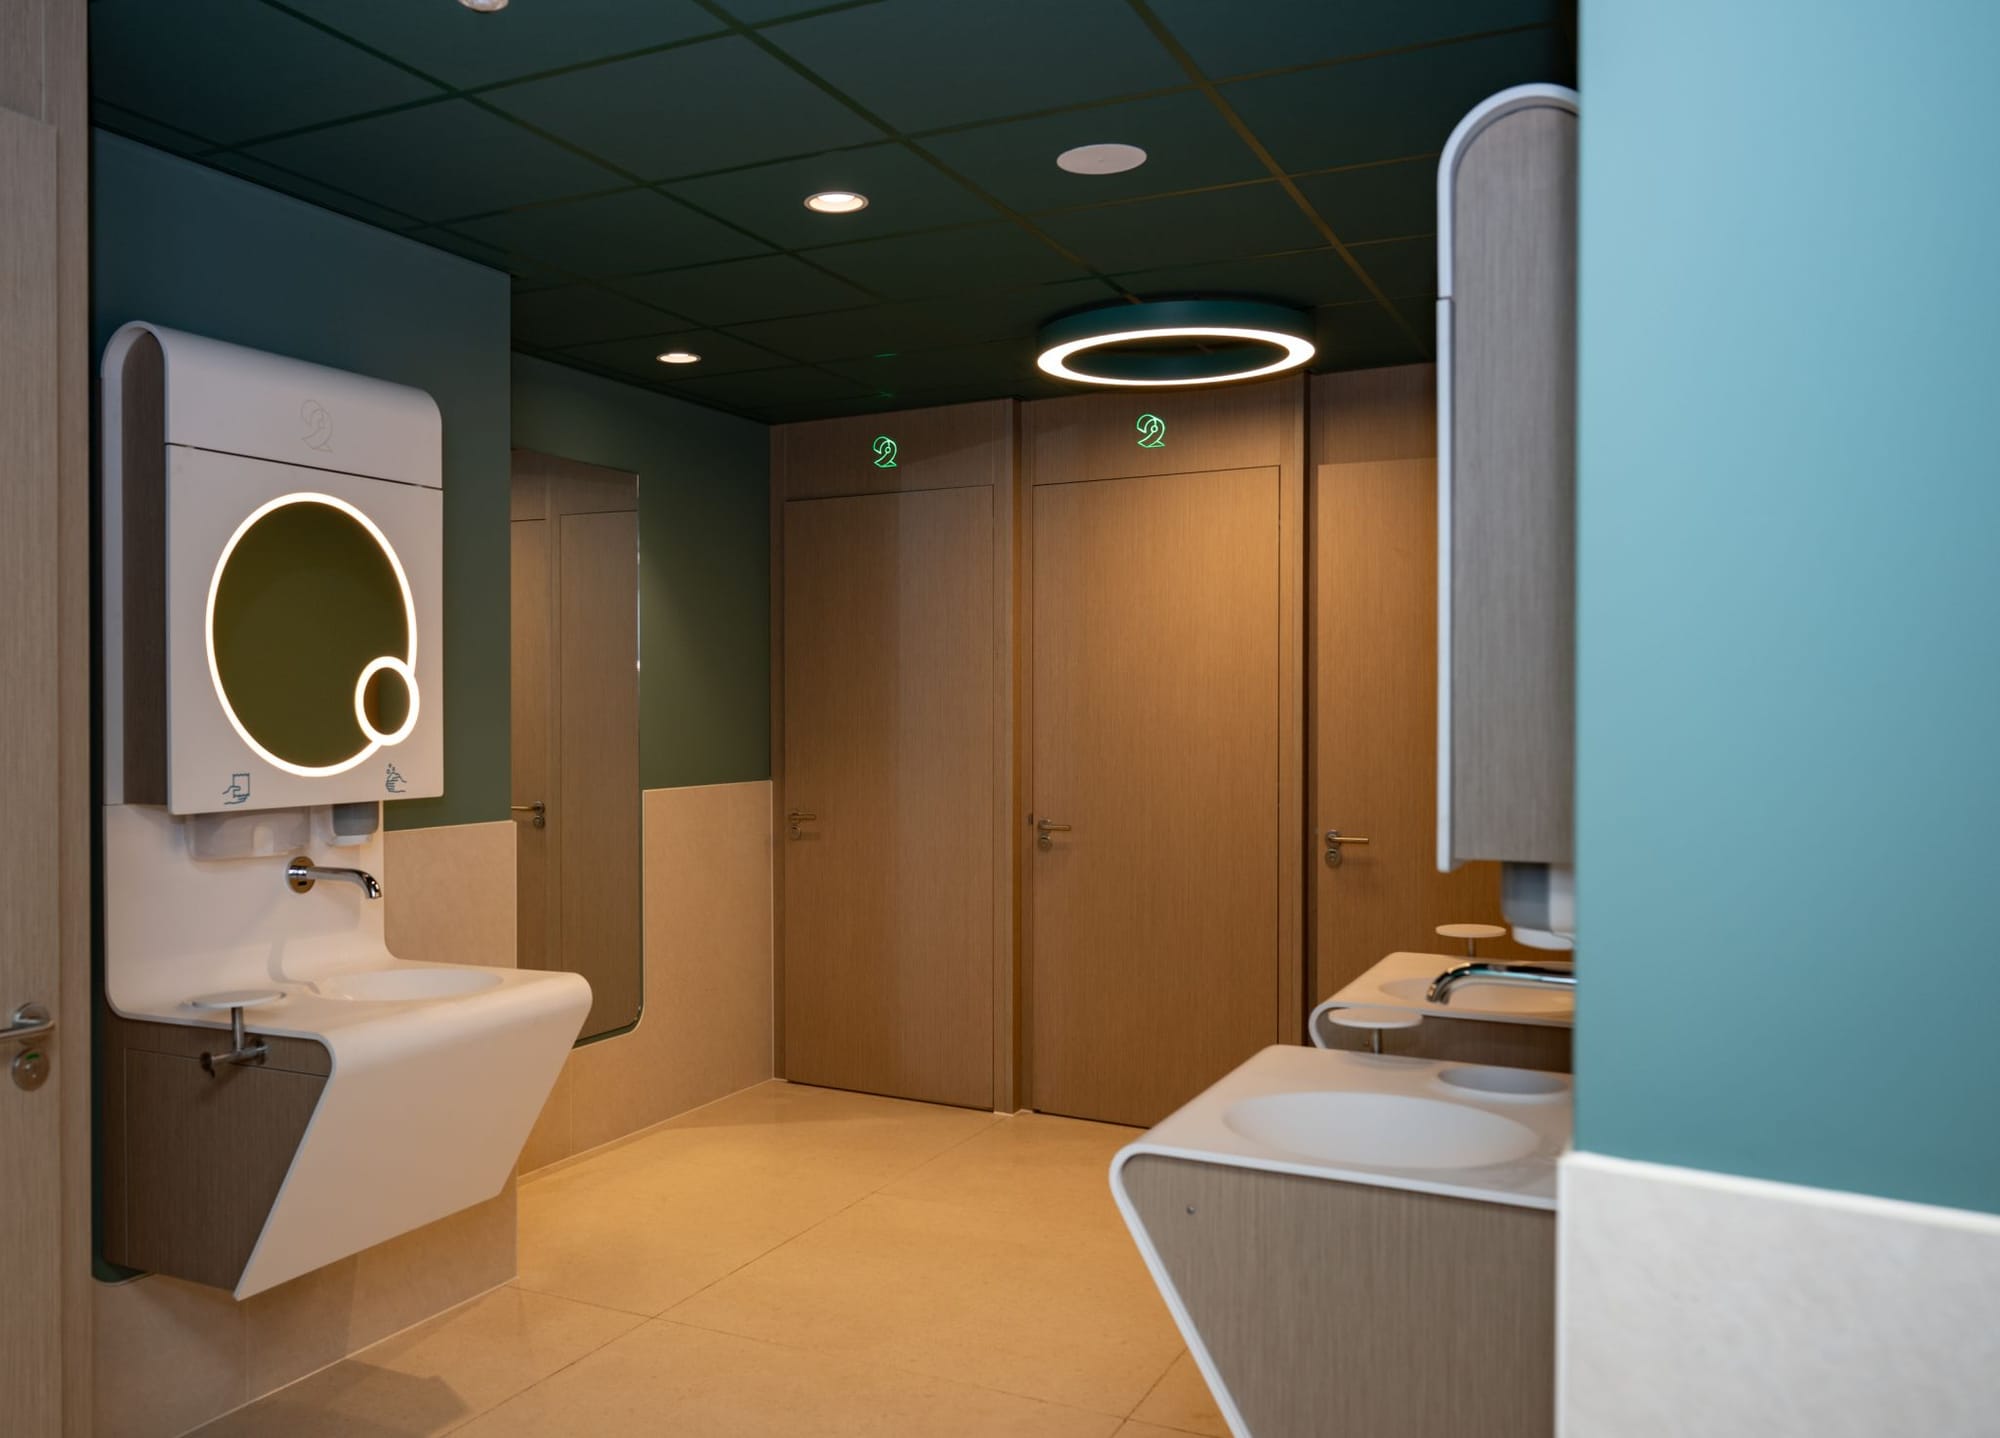  Обновленная концепция туалета 2theloo снова открыта на АЗС Shell Hazeldonk-West (Нидерланды)